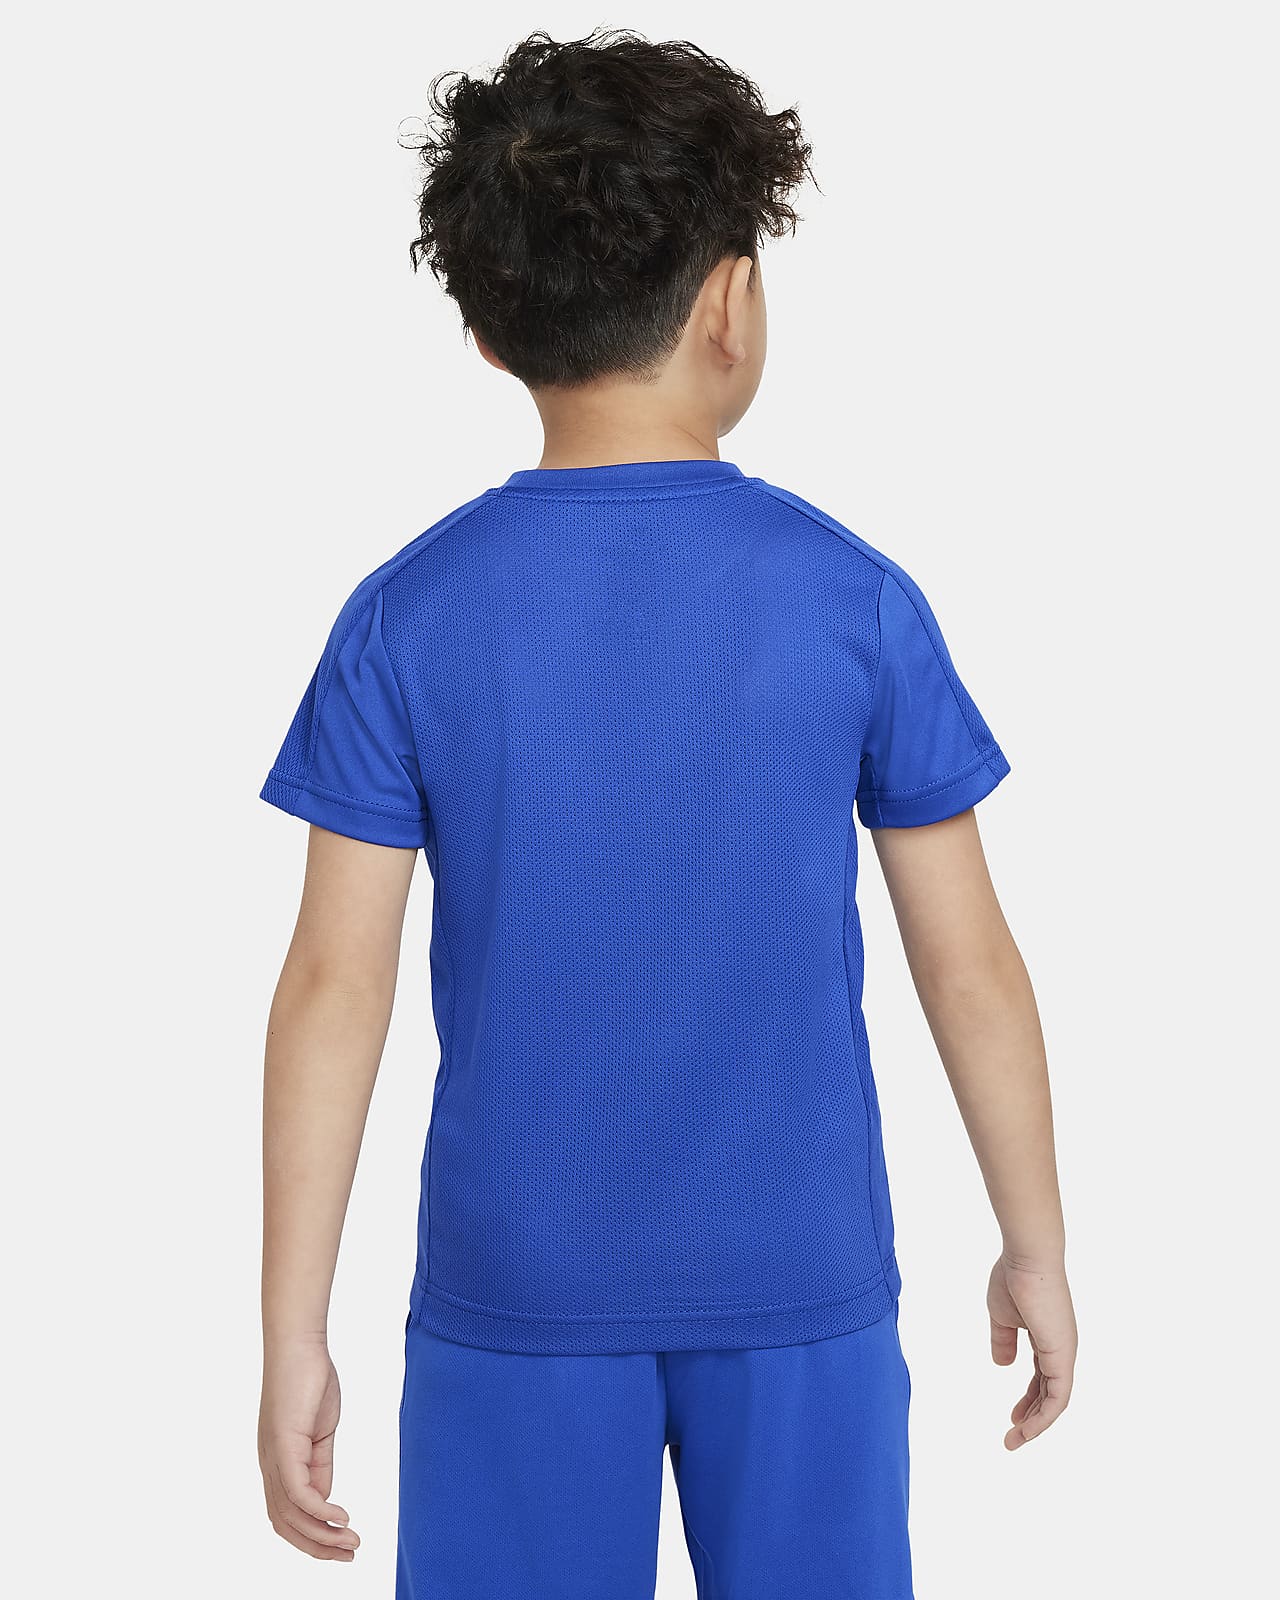 Short Kids\' Little Top. Academy Dri-FIT Nike Sleeve